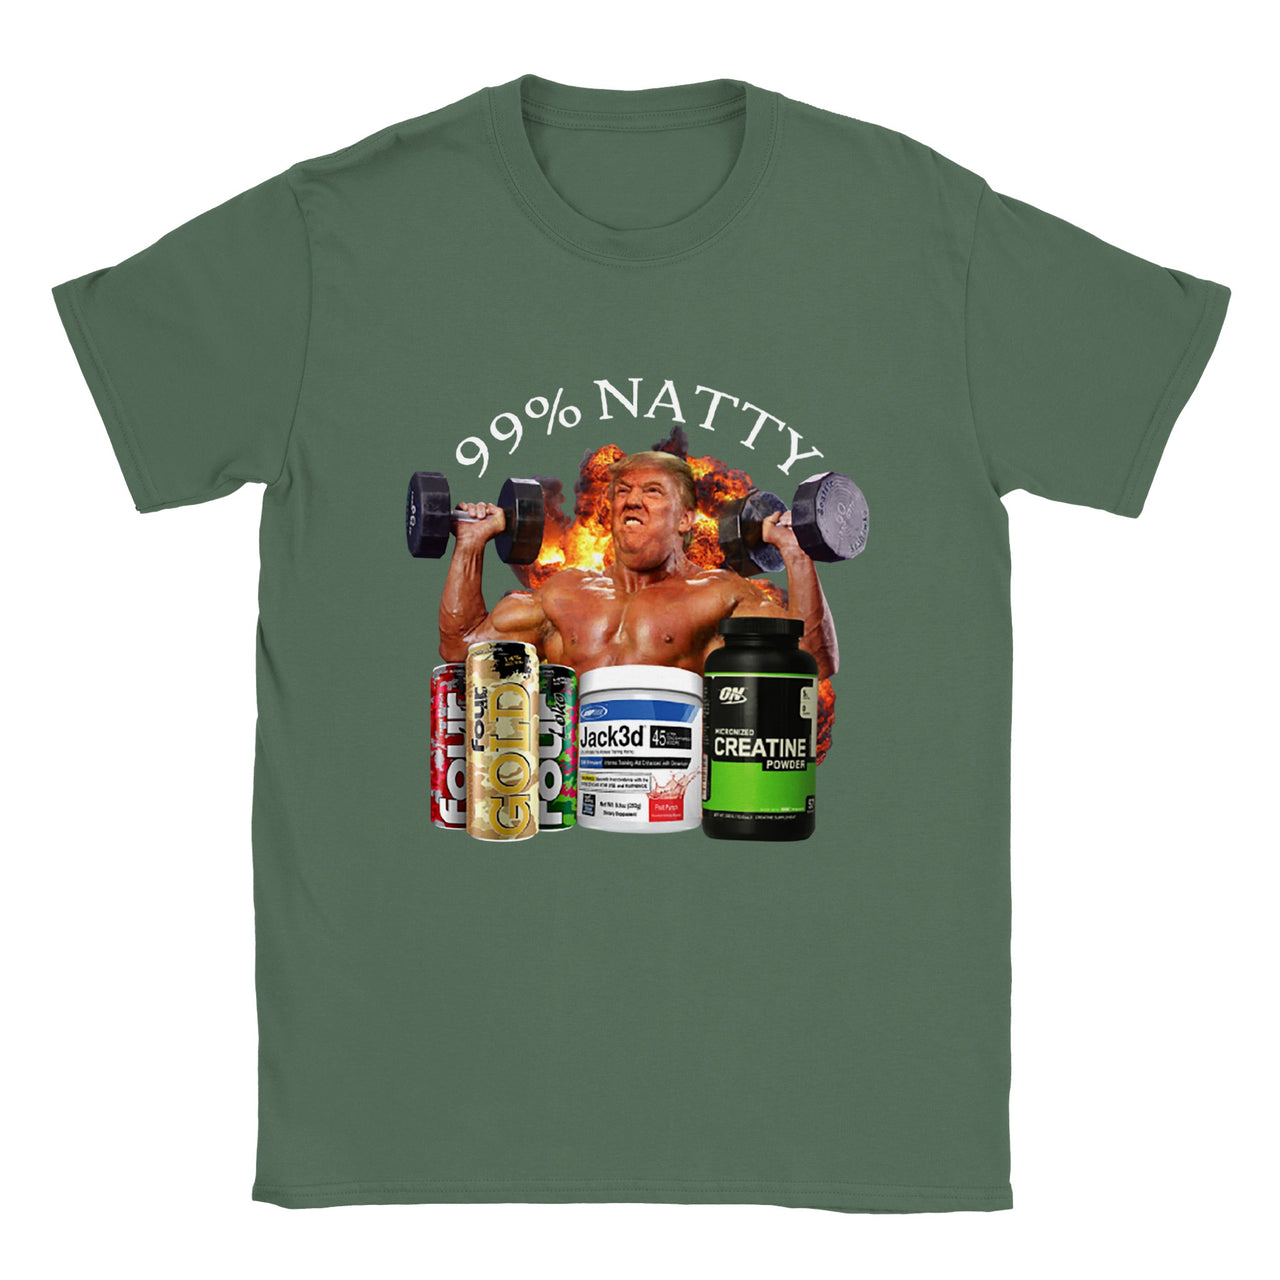 99% Natty T-Shirt